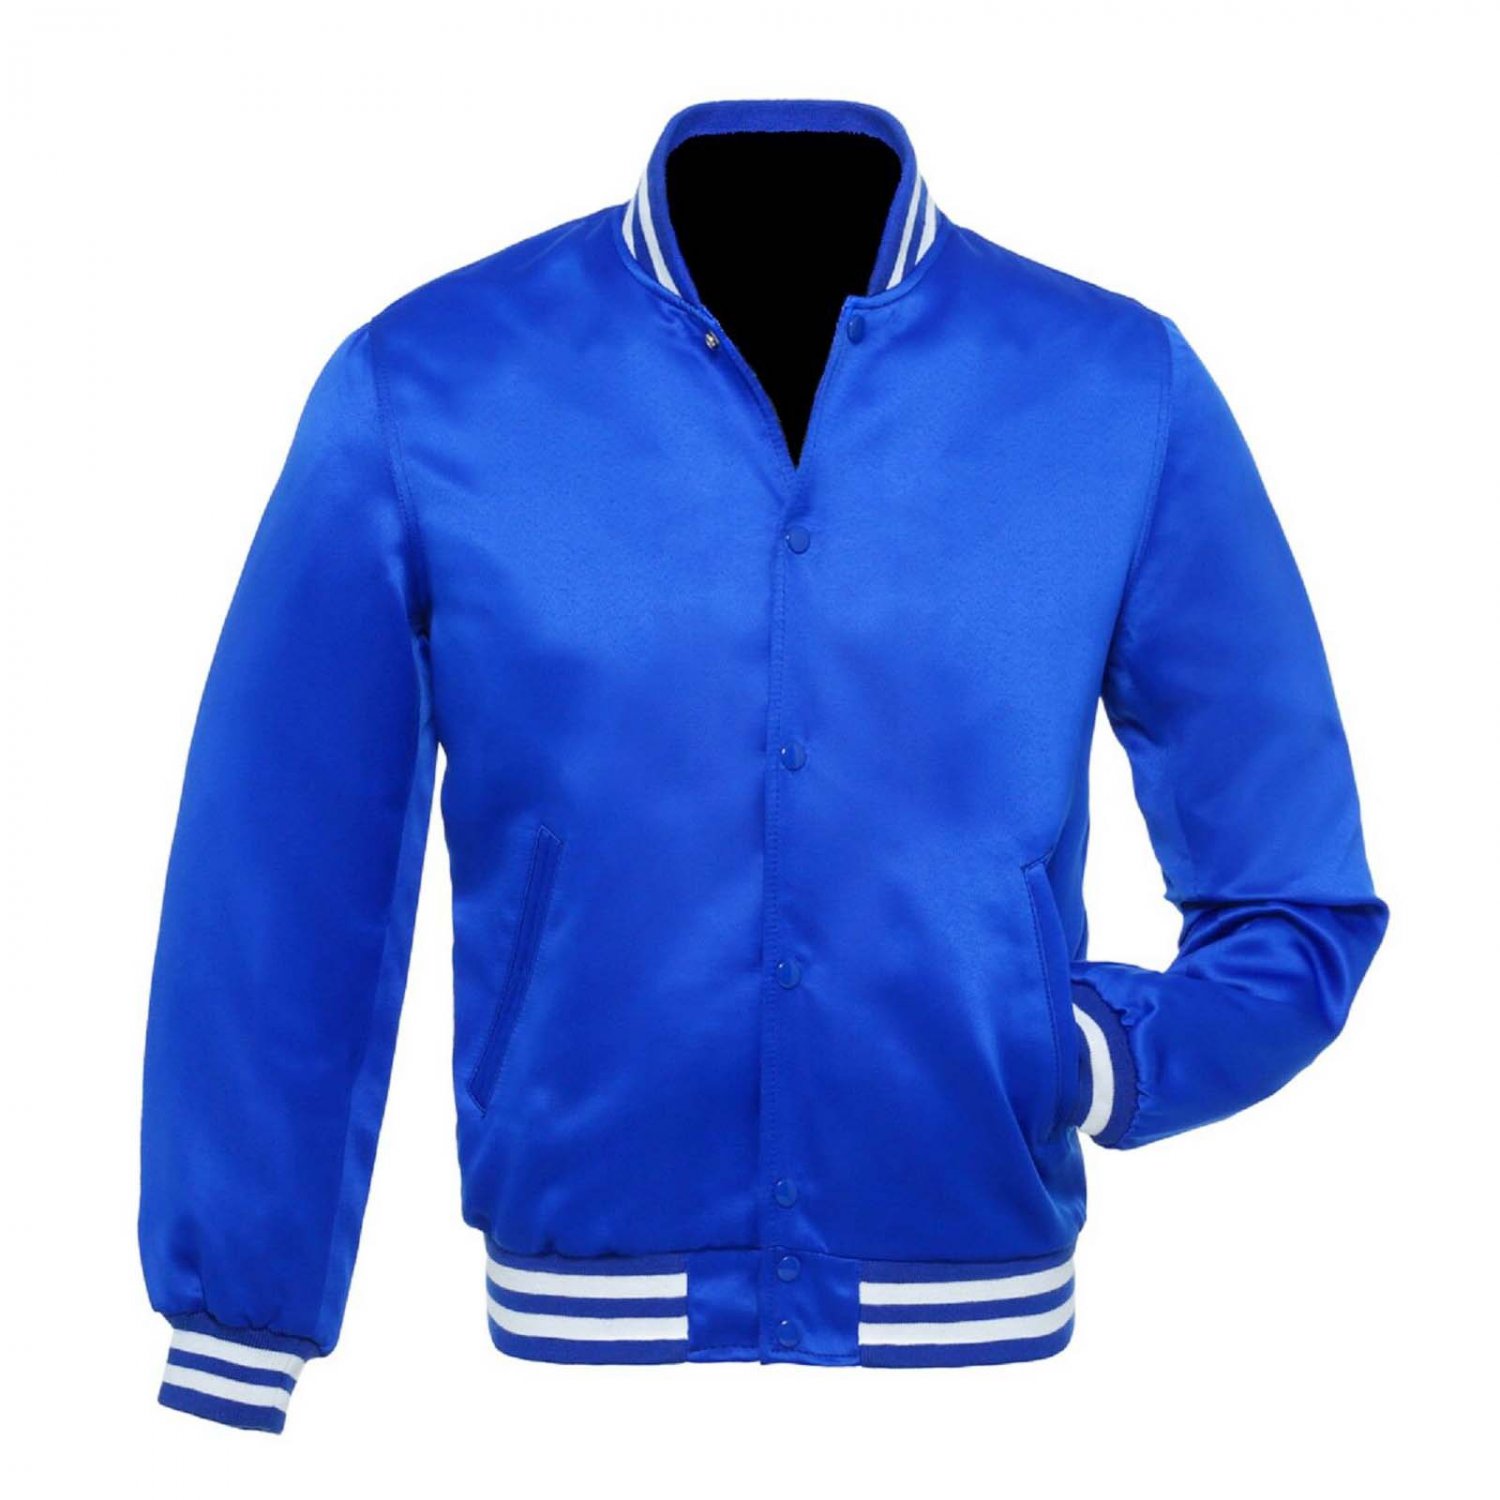 New Satin Baseball Collage Blue varsity Bomber jacket White Trim size 5XL